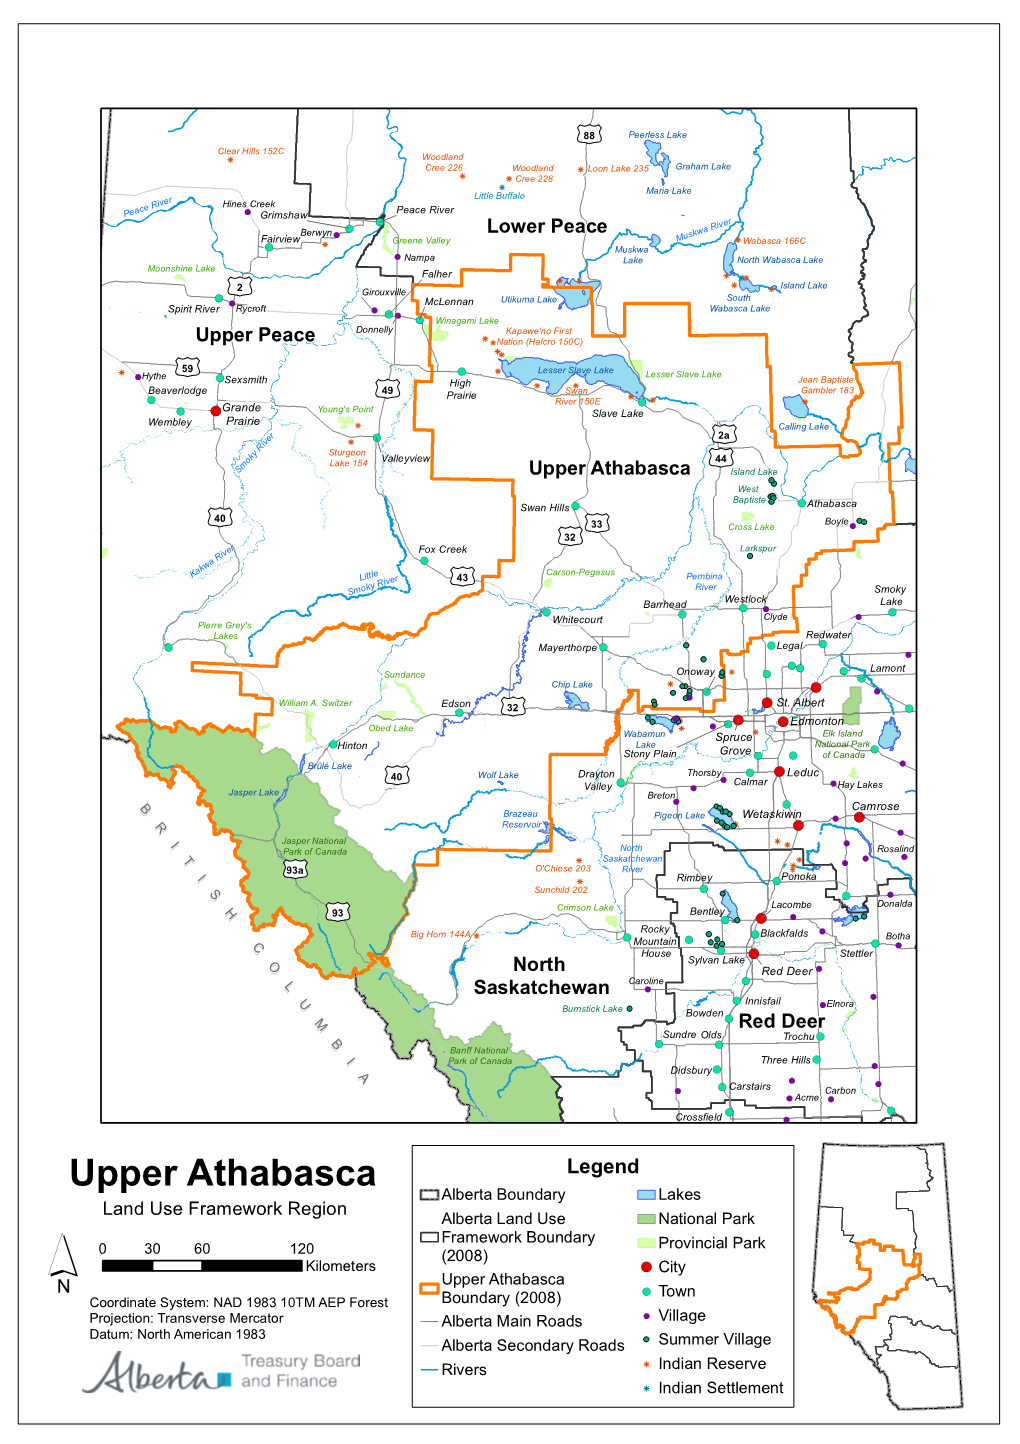 Alberta Land Use Framework Regions